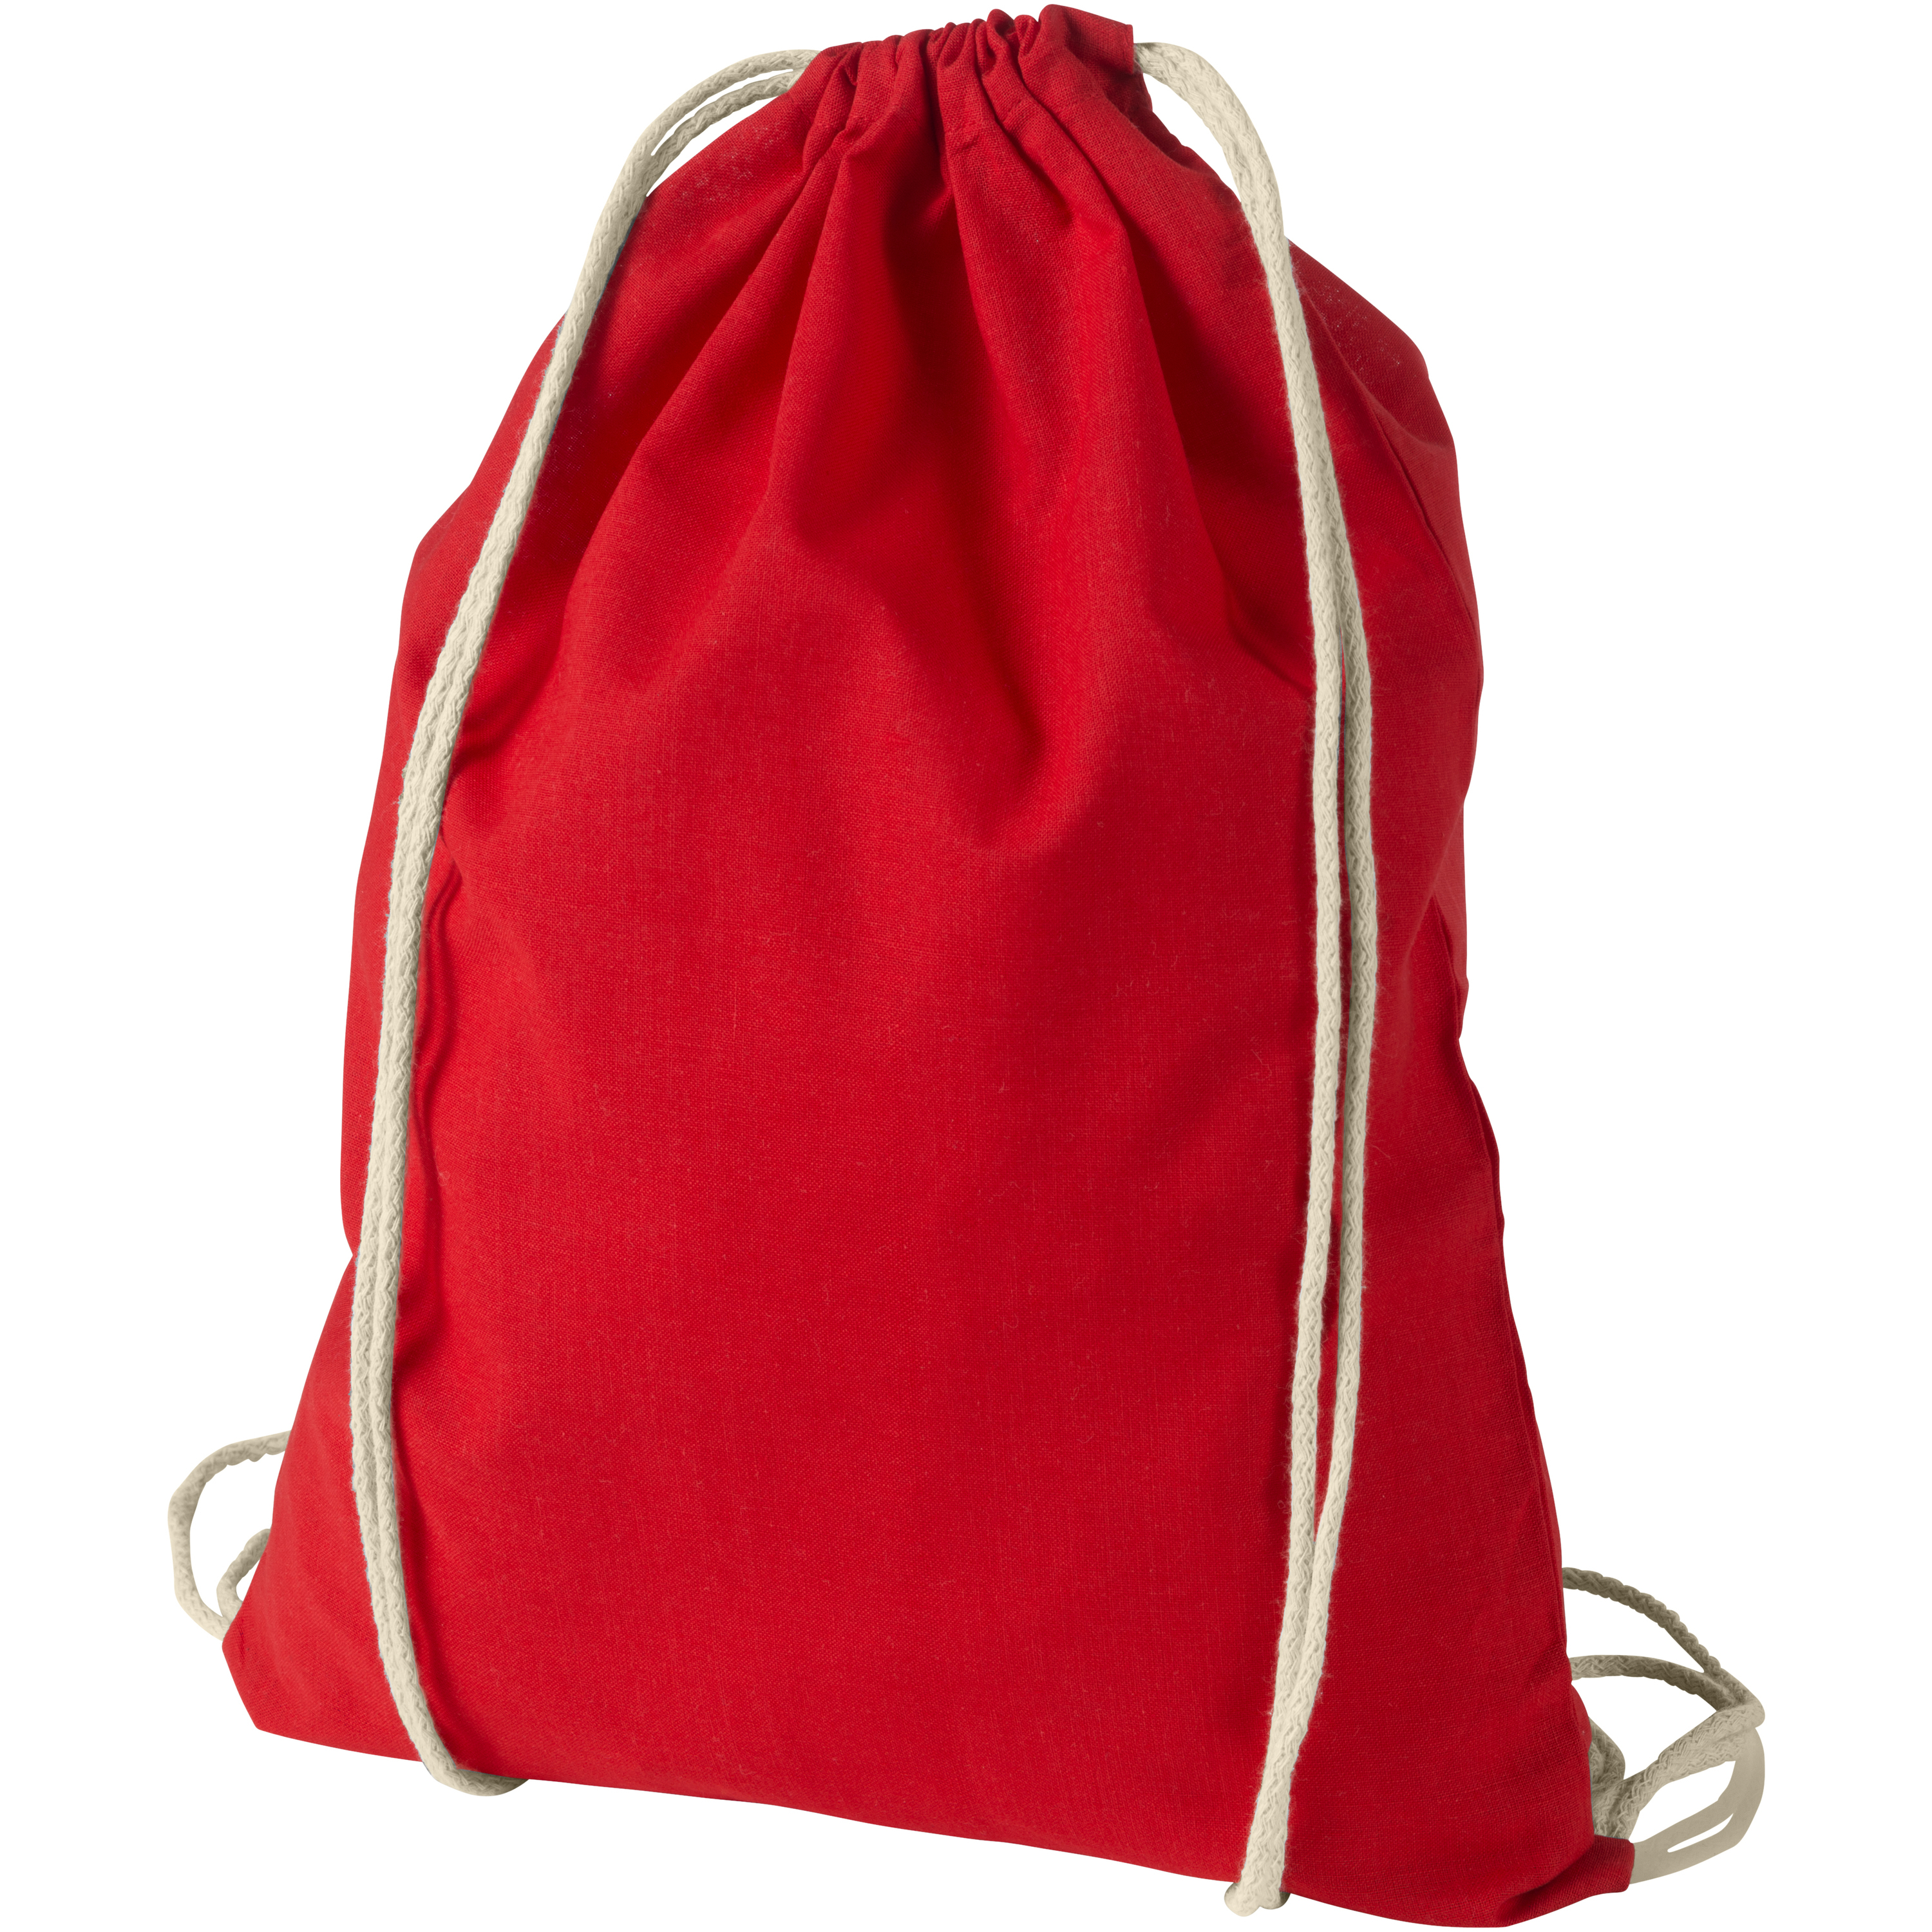 Oregon 100 g/m² cotton drawstring backpack 5L